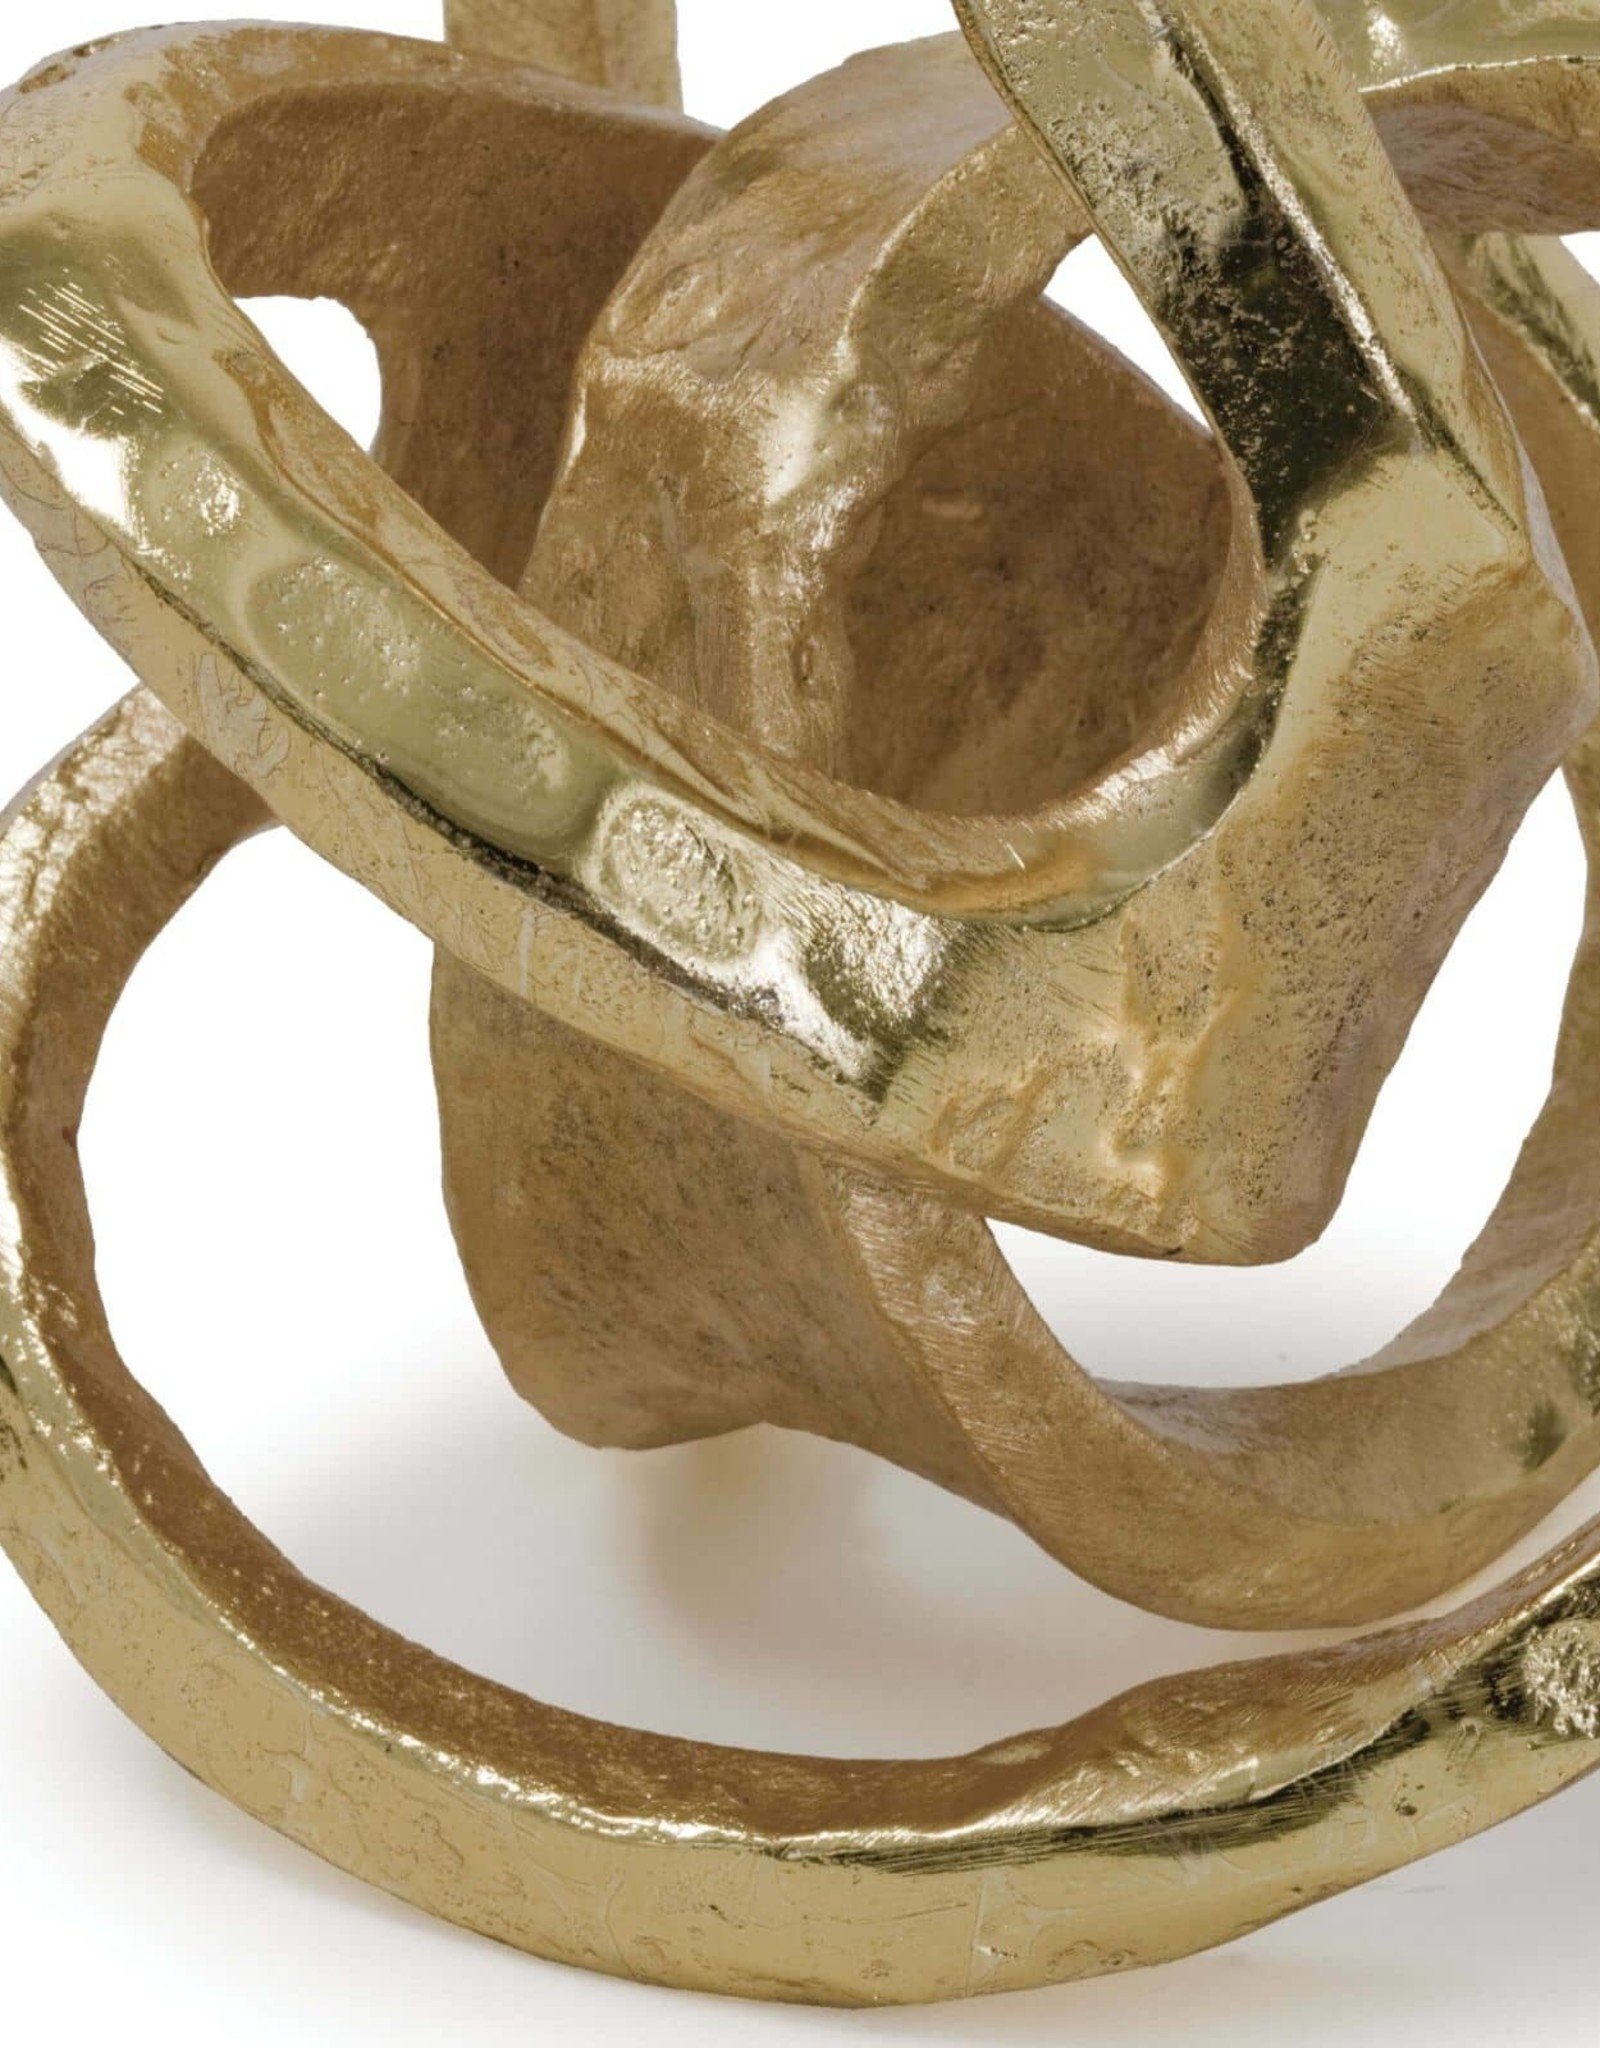 Regina Andrew Design Metal Knot (Gold)